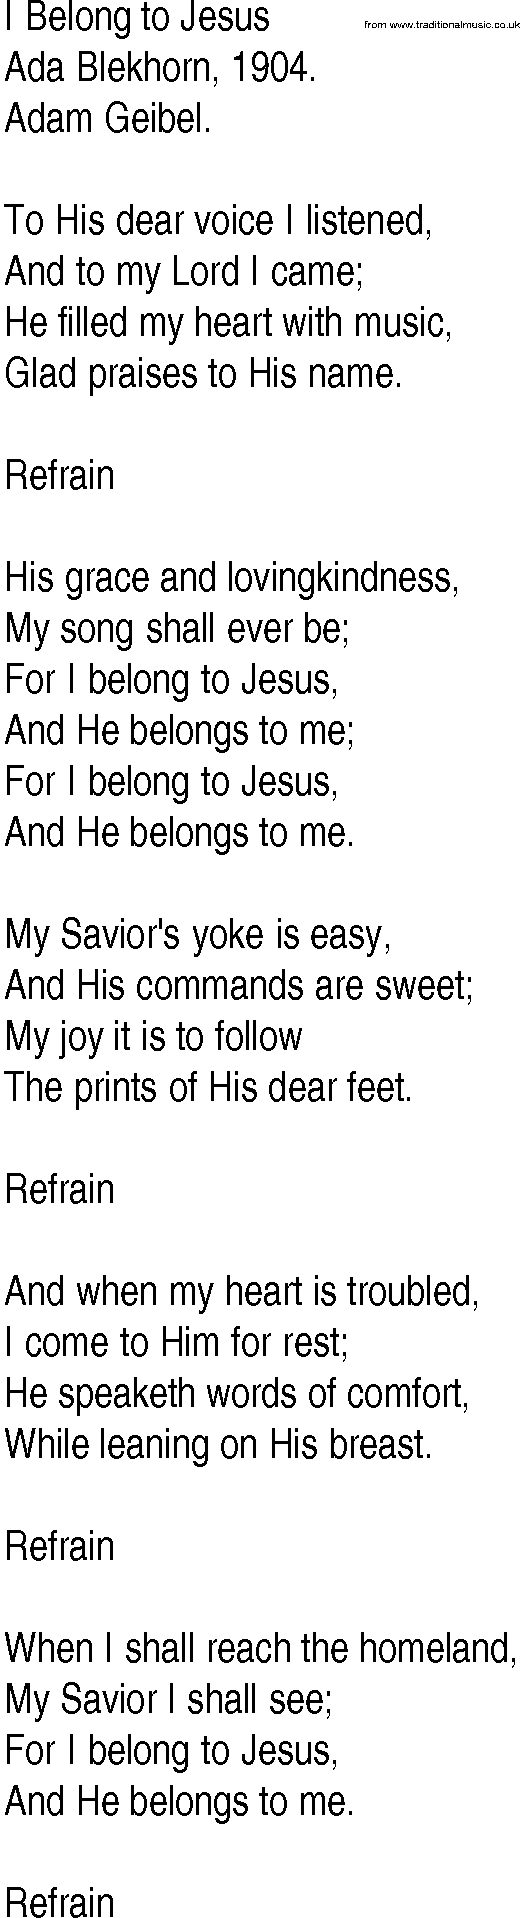 Hymn and Gospel Song: I Belong to Jesus by Ada Blekhorn lyrics